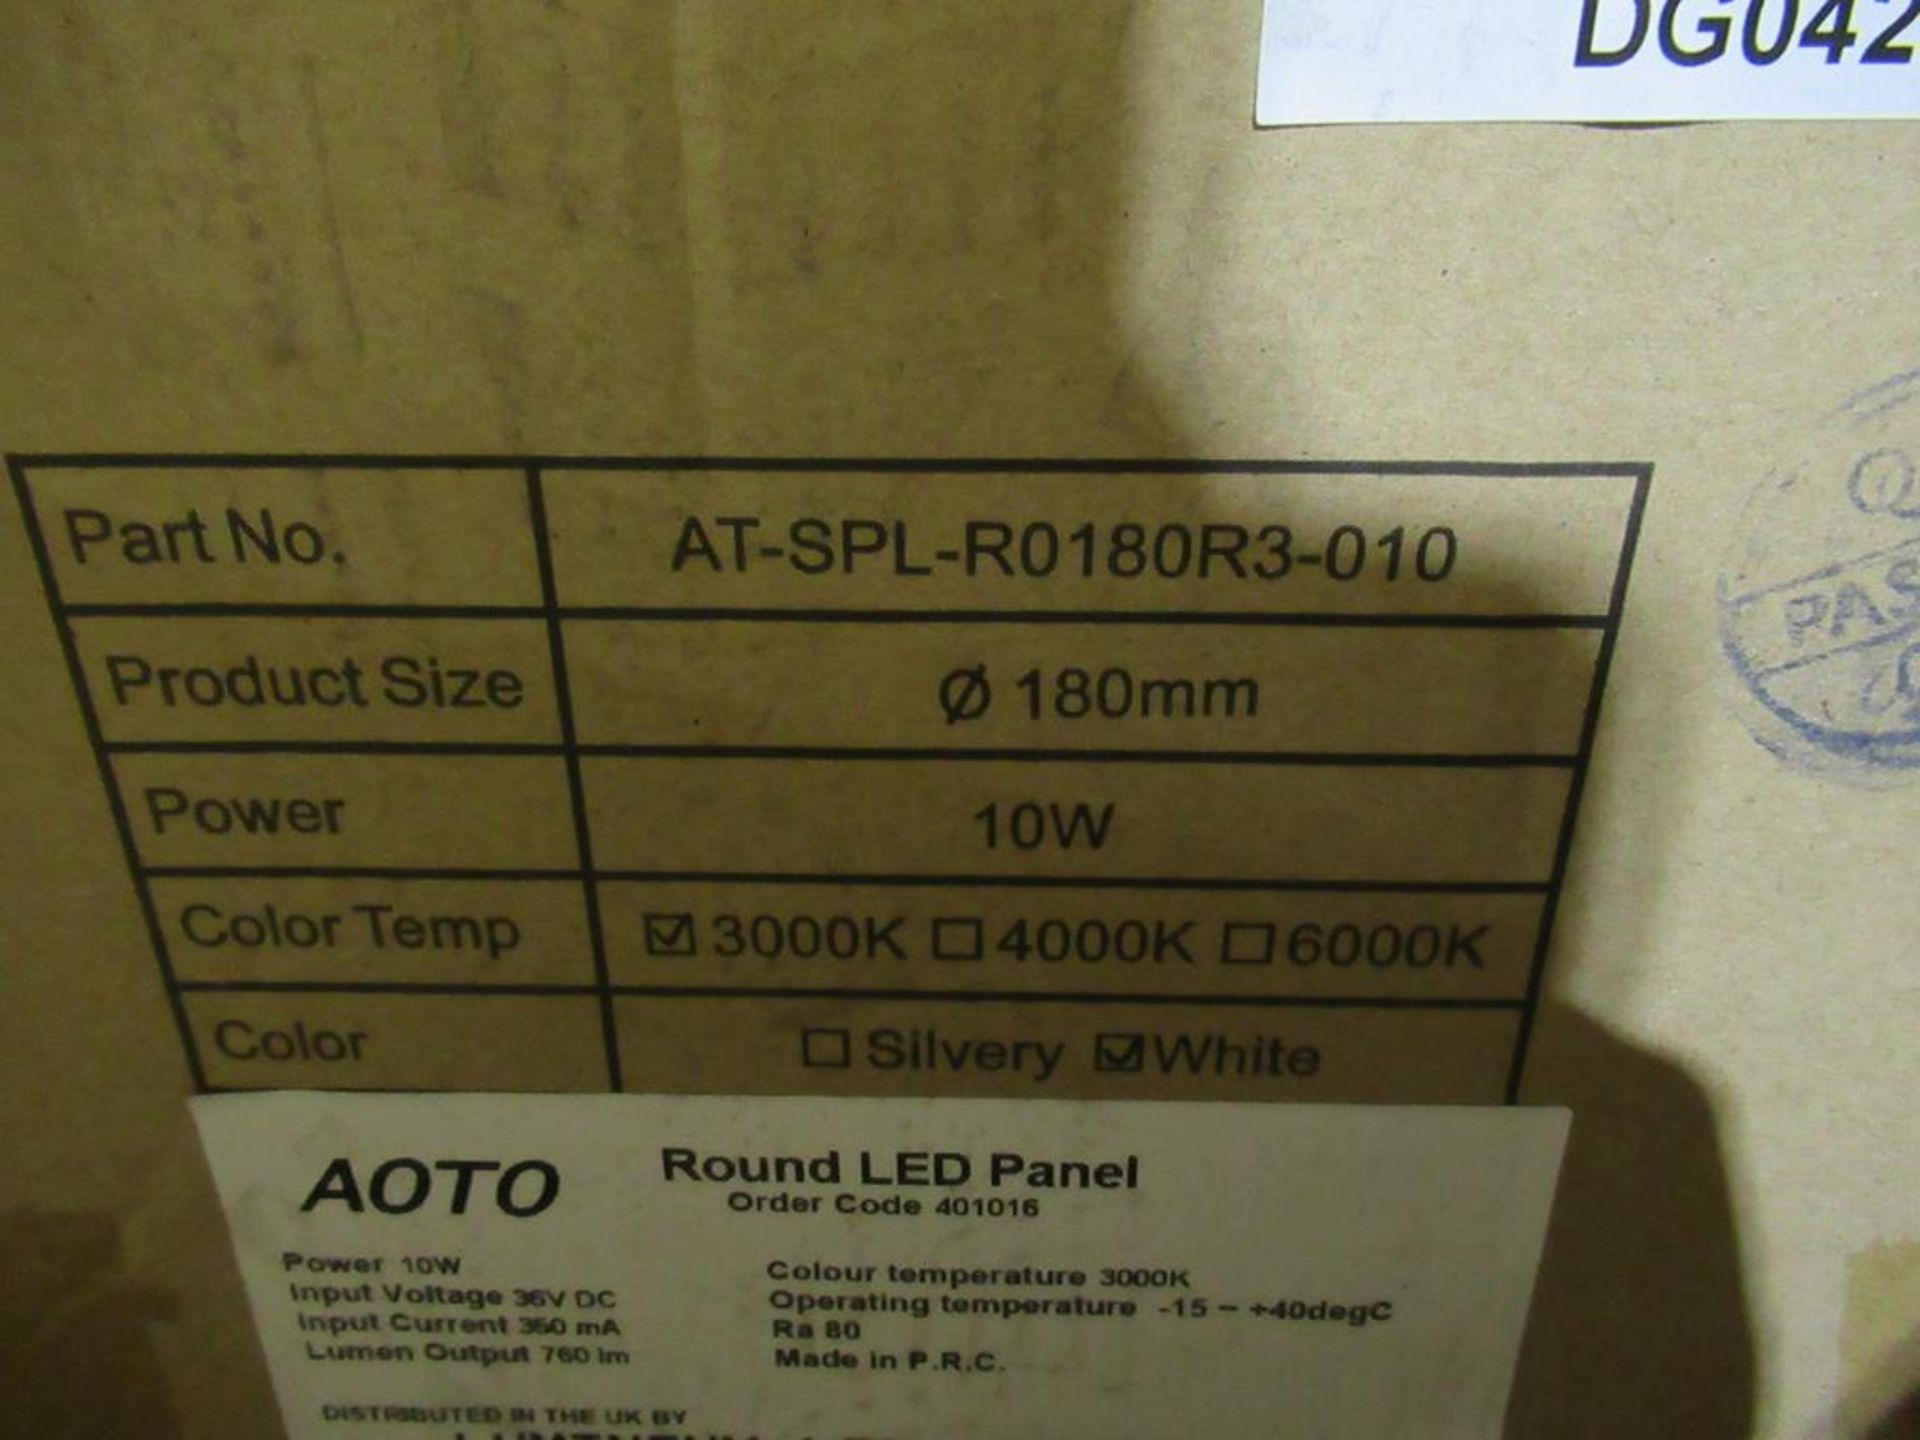 22 x Decorative Round LED Panel 10W 3000K White OEM Trade Price £295 - Image 4 of 4